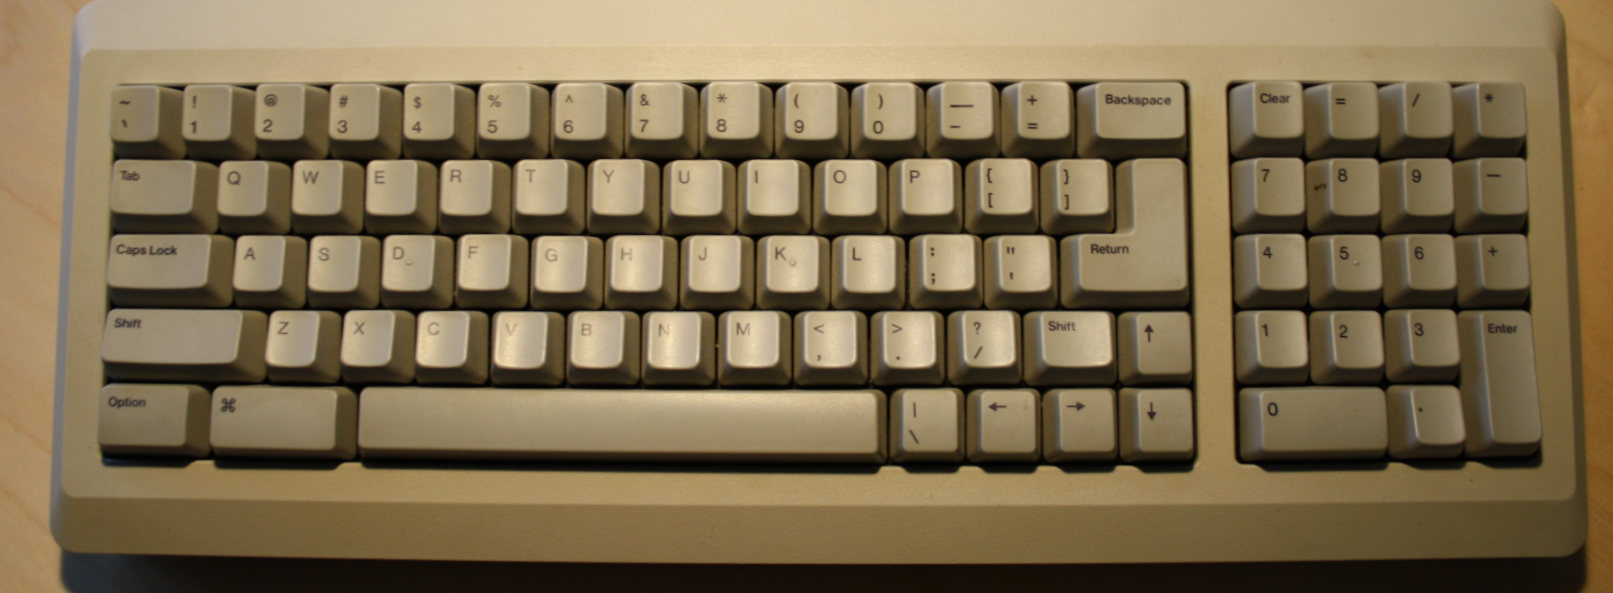 Figure 26: Macintosh Plus keyboard. Source: Wikipedia.